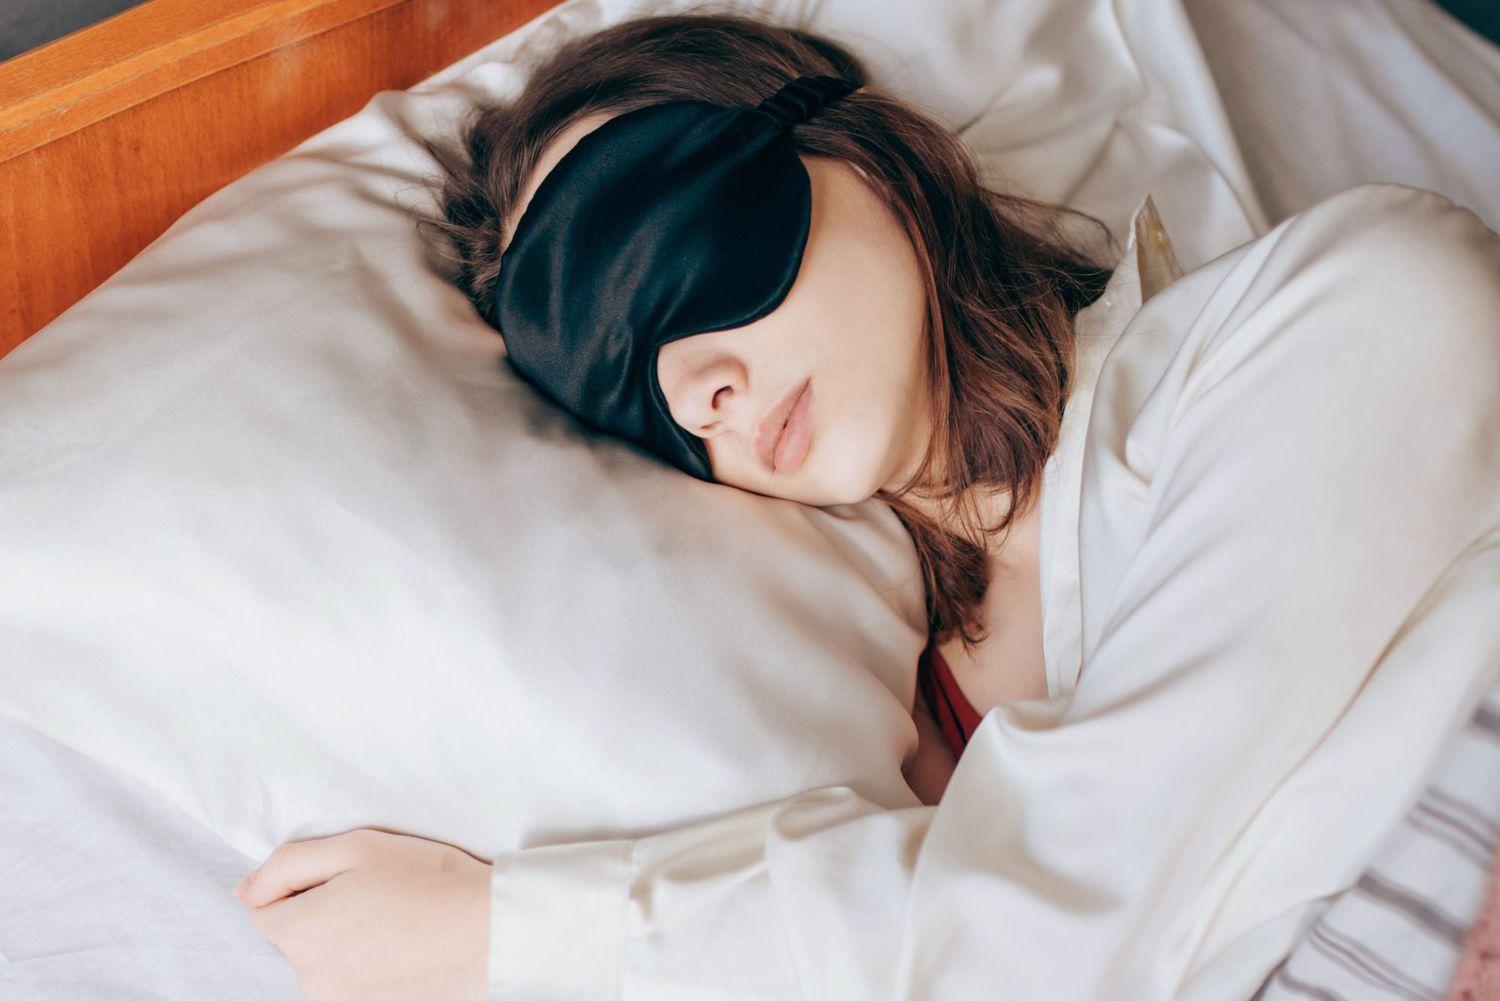 Does Sleeping on a Silk Pillowcase Really Benefit Hair?